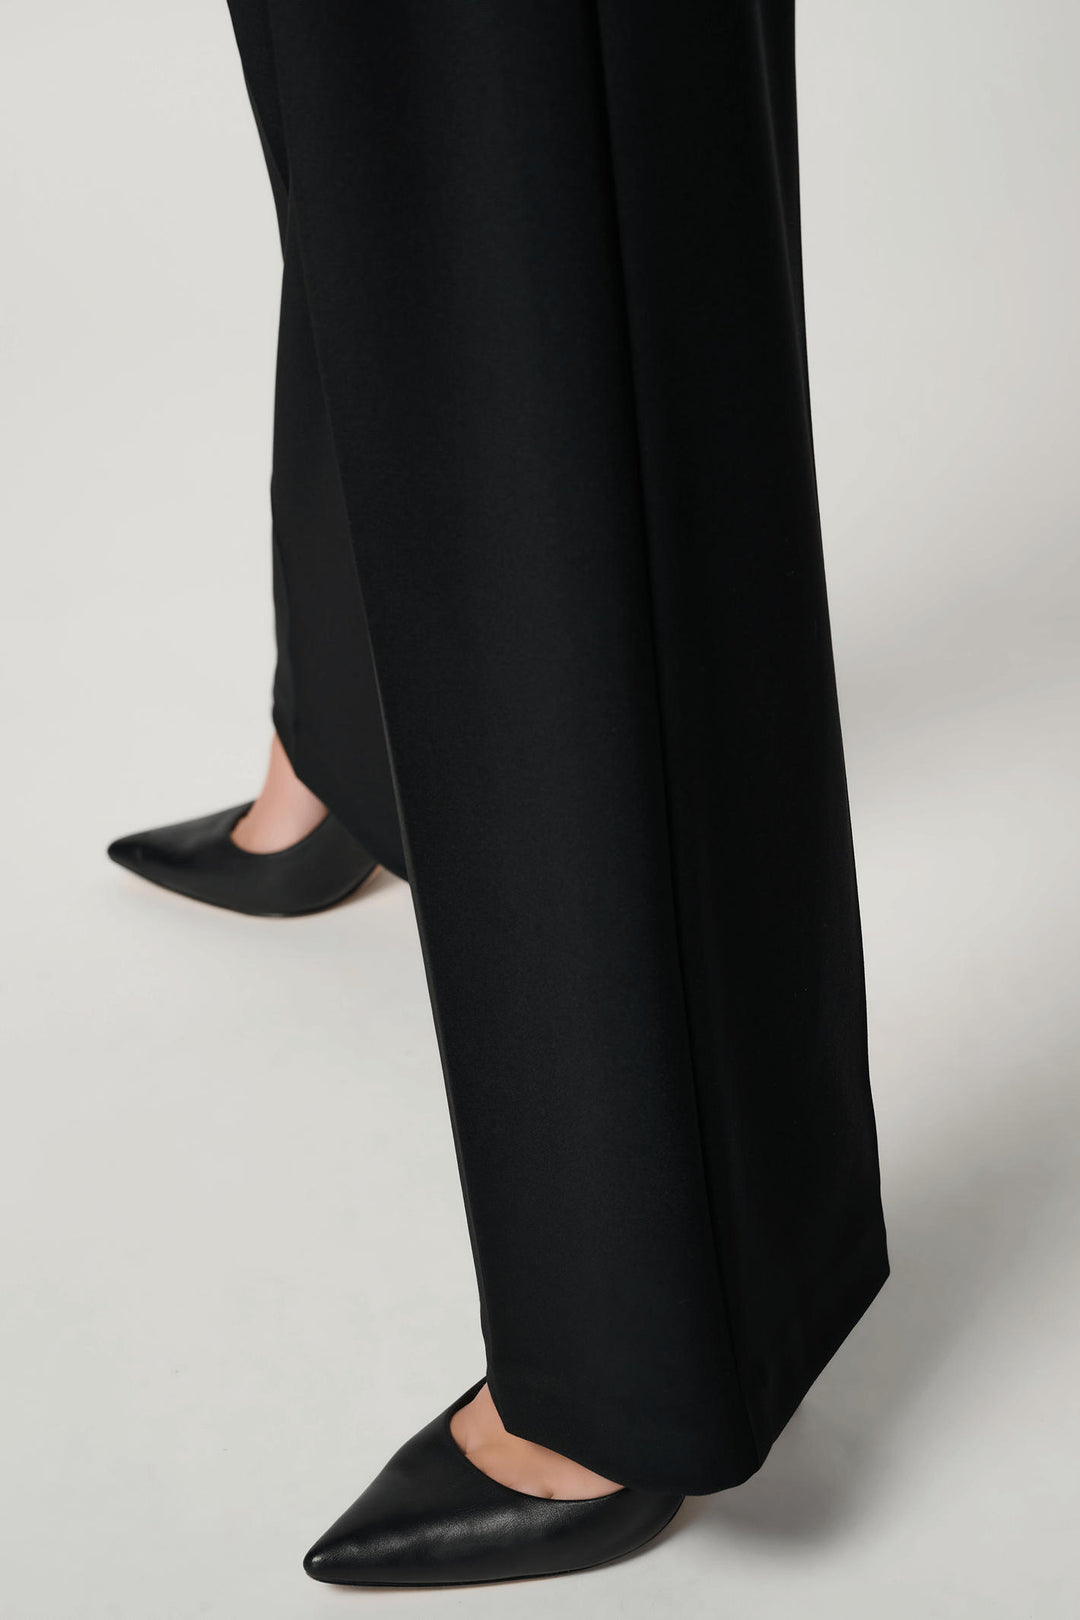 Joseph Ribkoff 153088 Black Pull-On Straight Leg Trousers - Olivia Grace Fashion